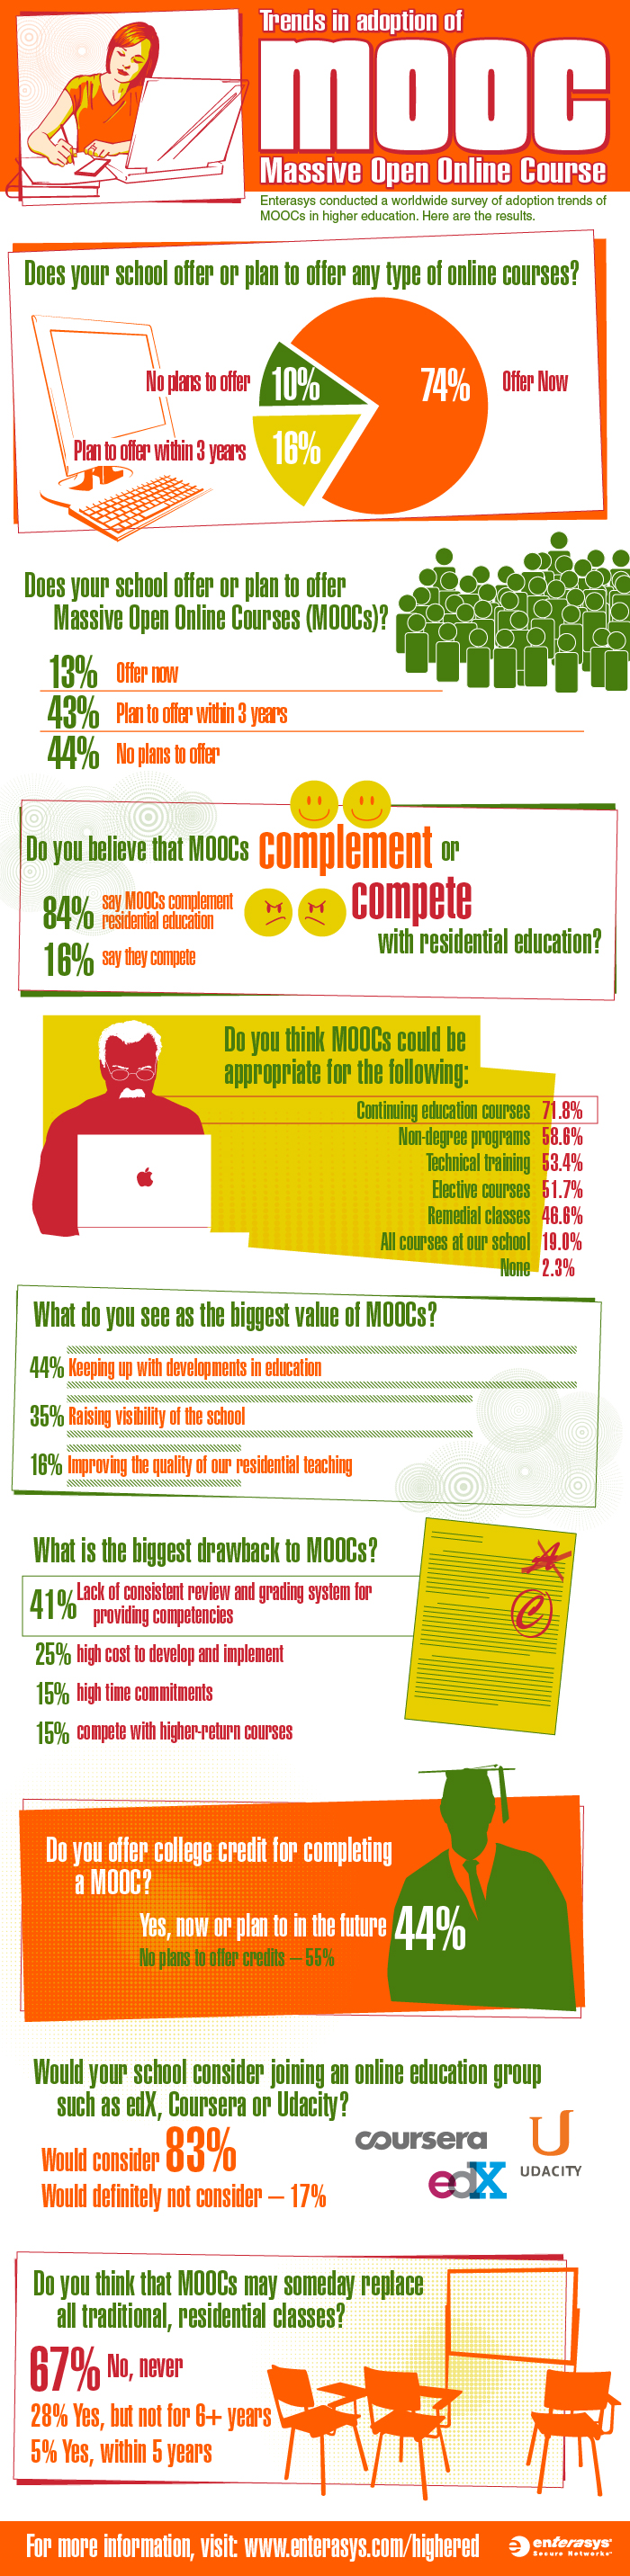 MOOCs Higher Education Infographic